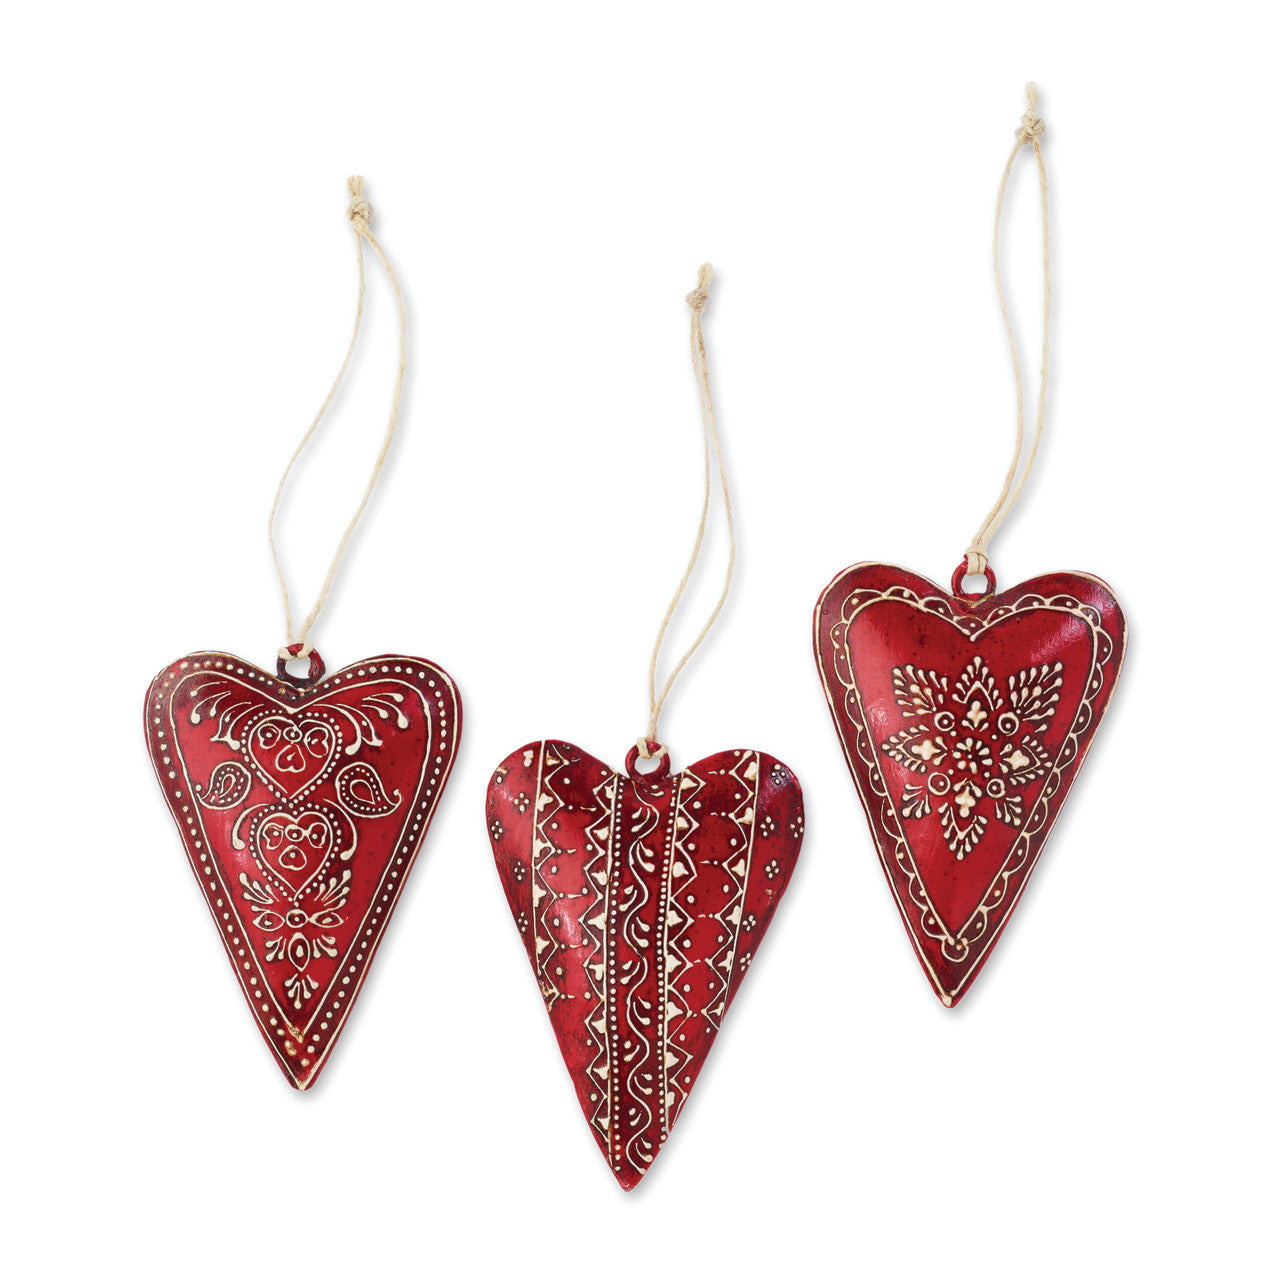 Small Metal Heart Ornaments - 3 Assorted Designs